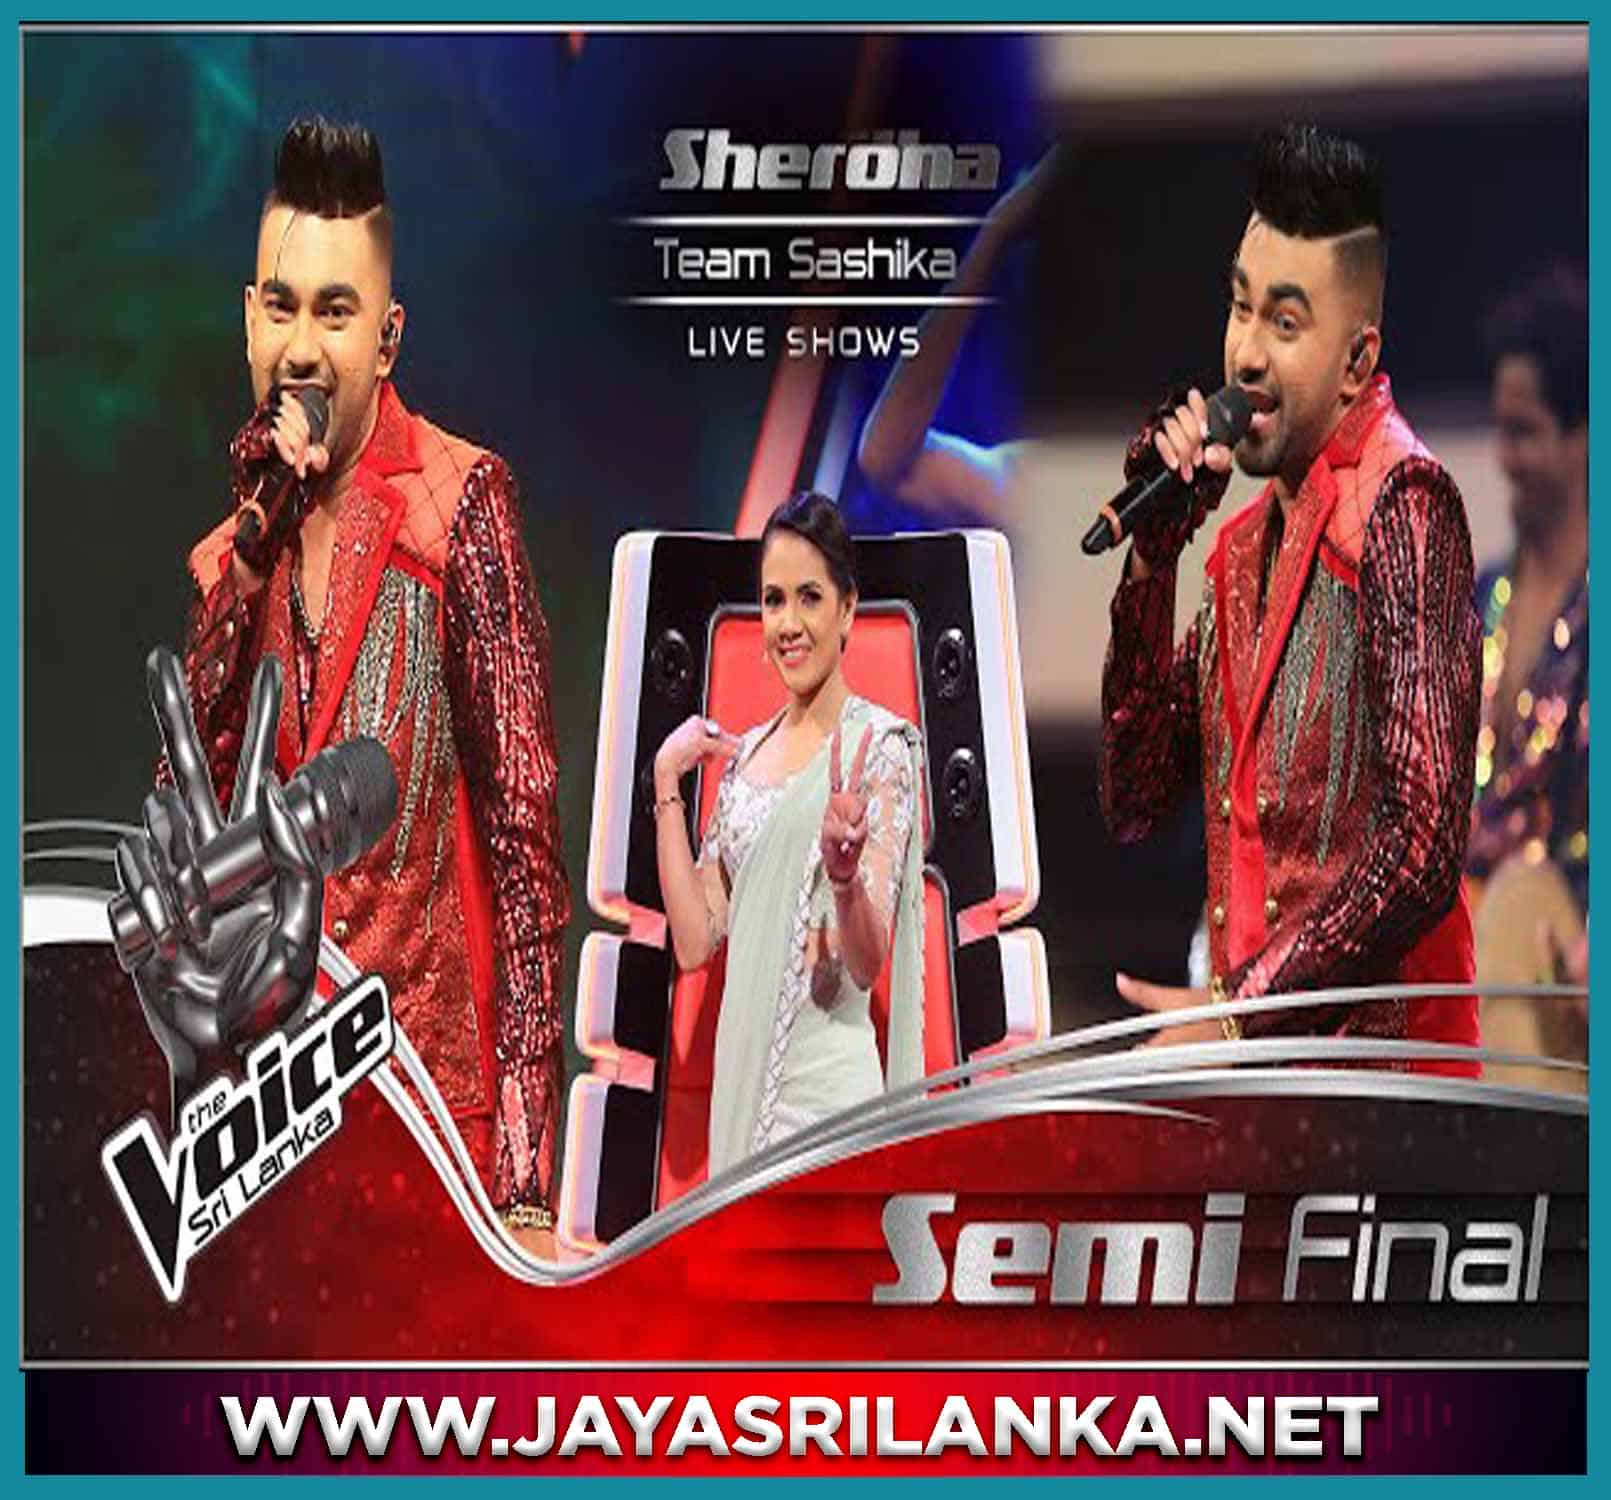 Panjab MC + Nelum Wilen Pana (The Voice Sri Lanka Semi Final)